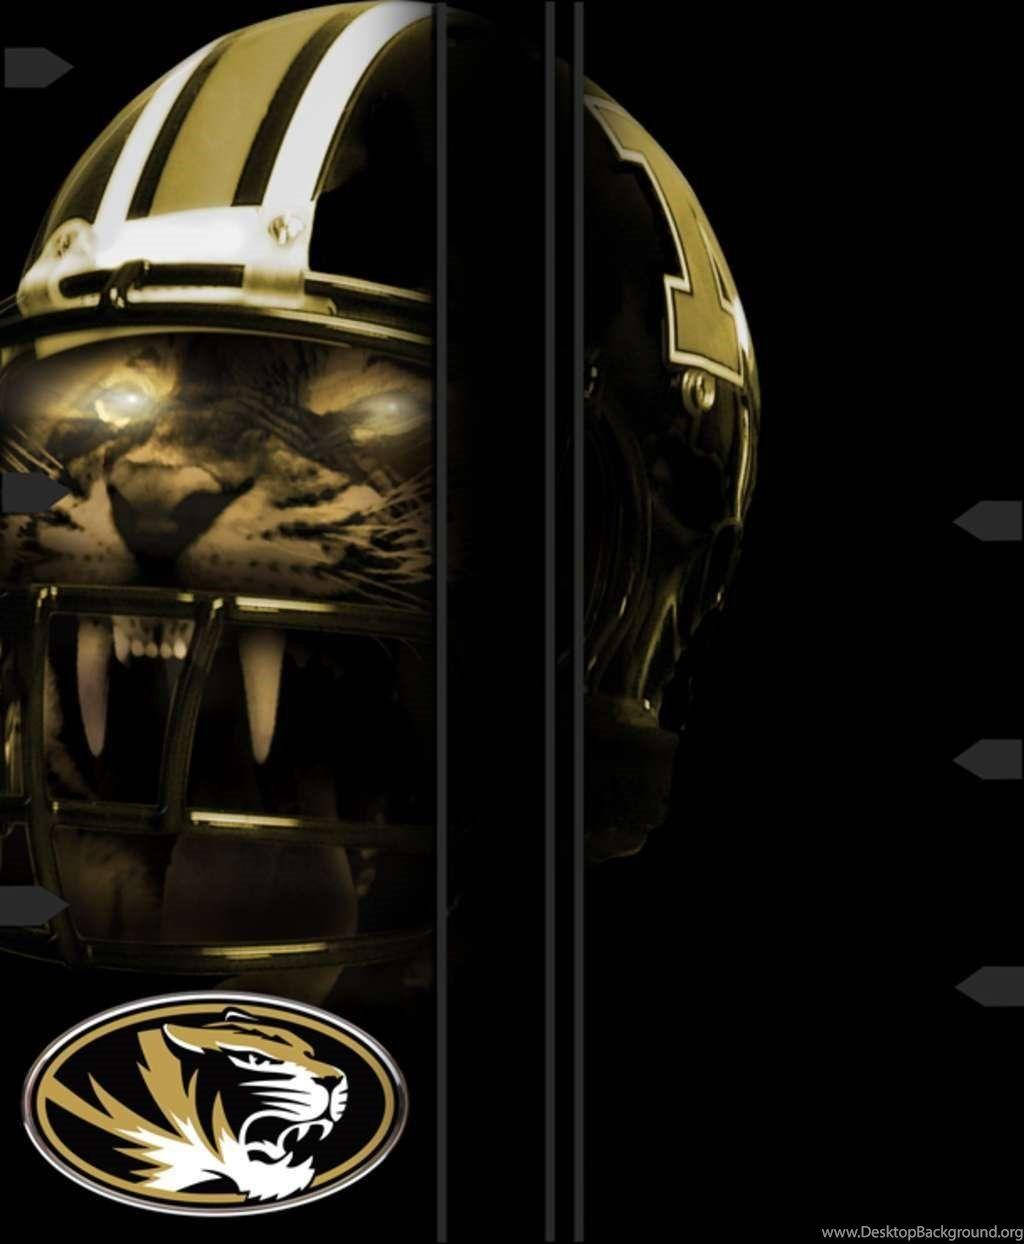 Missouri Tigers Soccer Helmet Black Background Wallpaper